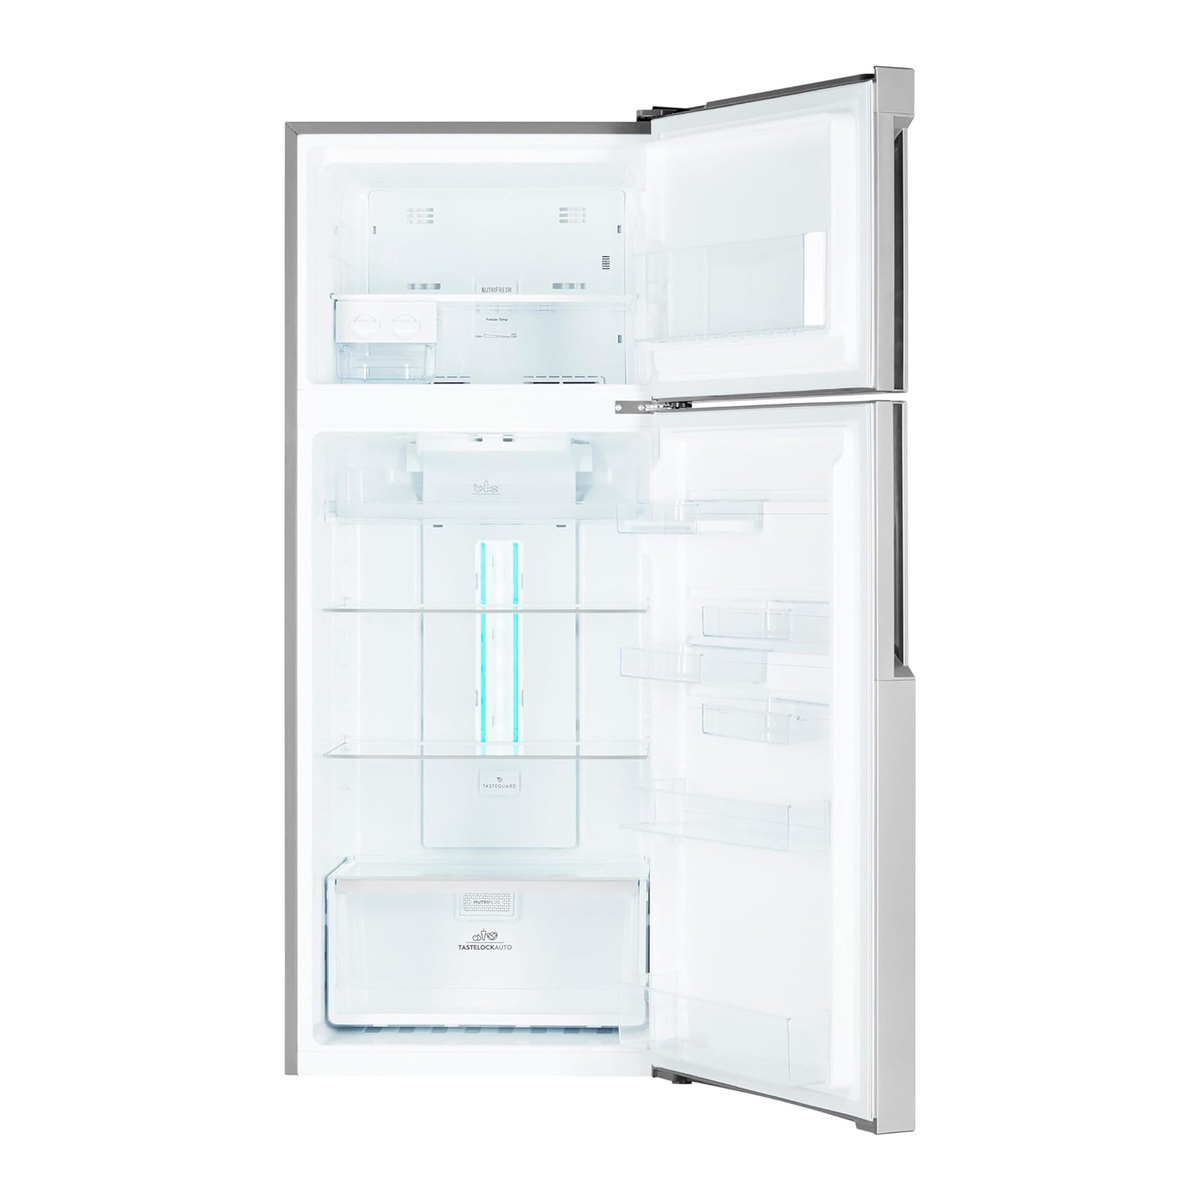 Electrolux Double Door Refrigerator, 426 L, Silver, EMT85610X